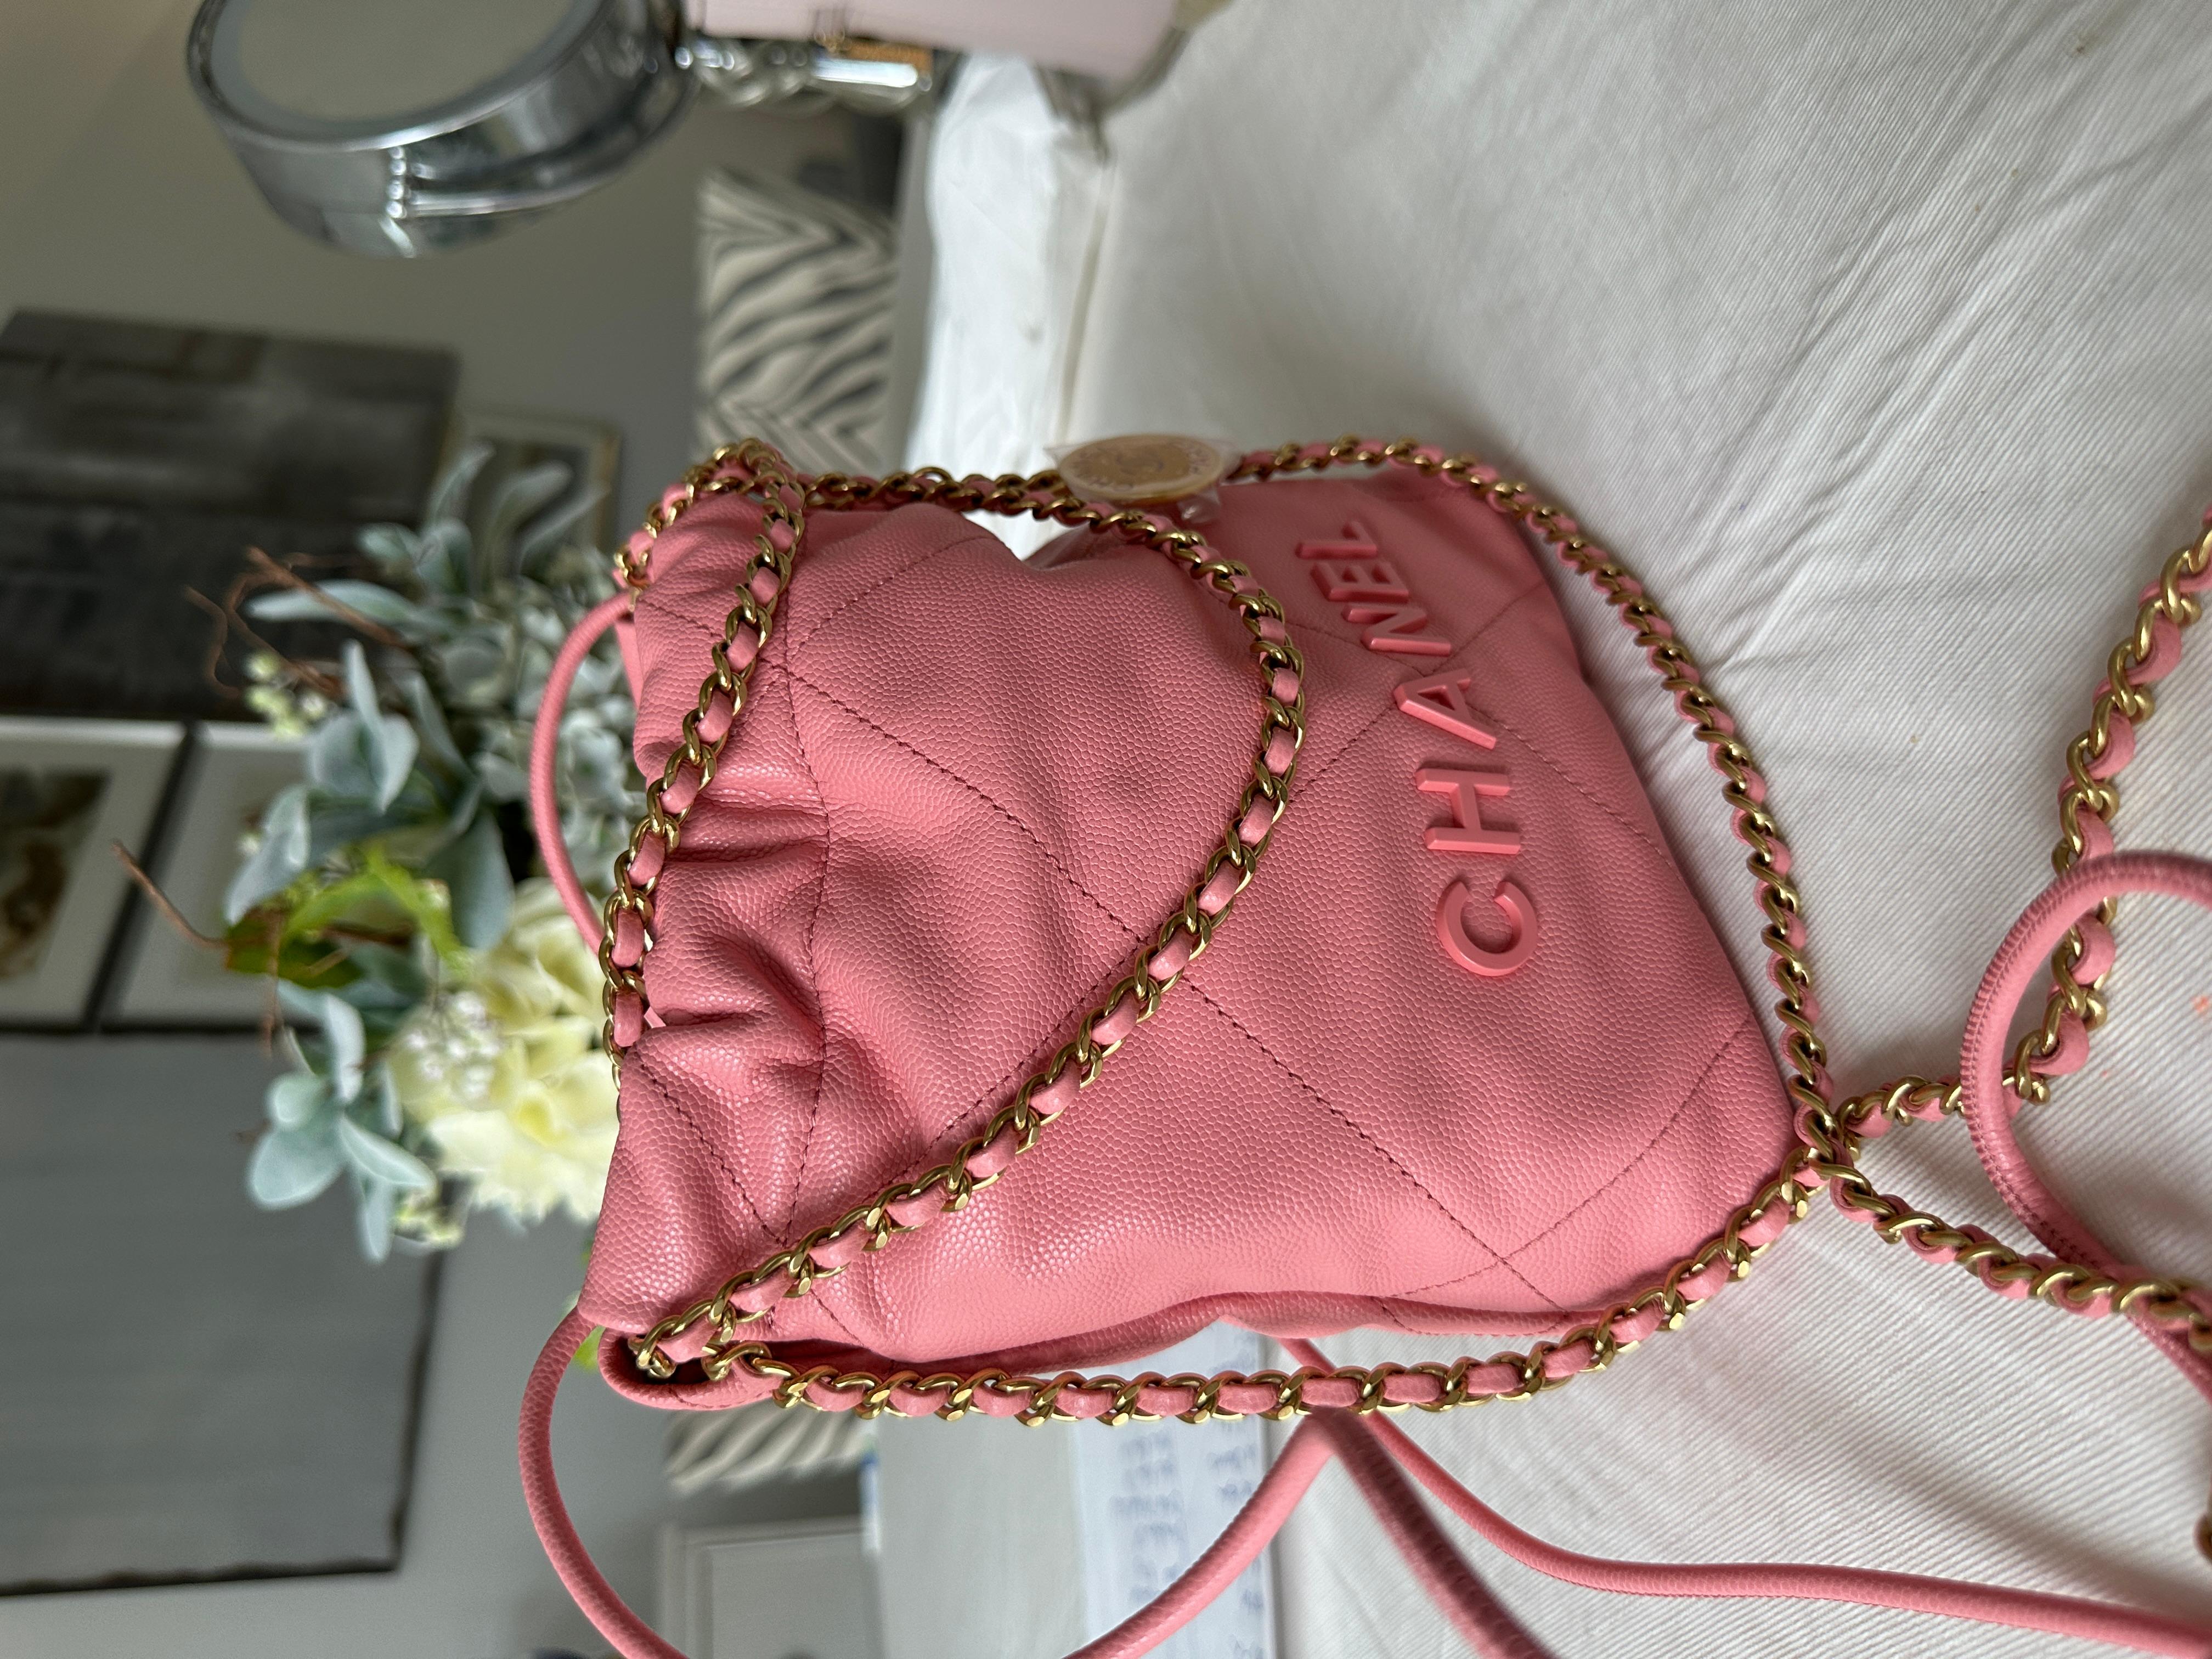 CHANEL 22 Mini Handbag Pink Coral Goldtone NEW 8